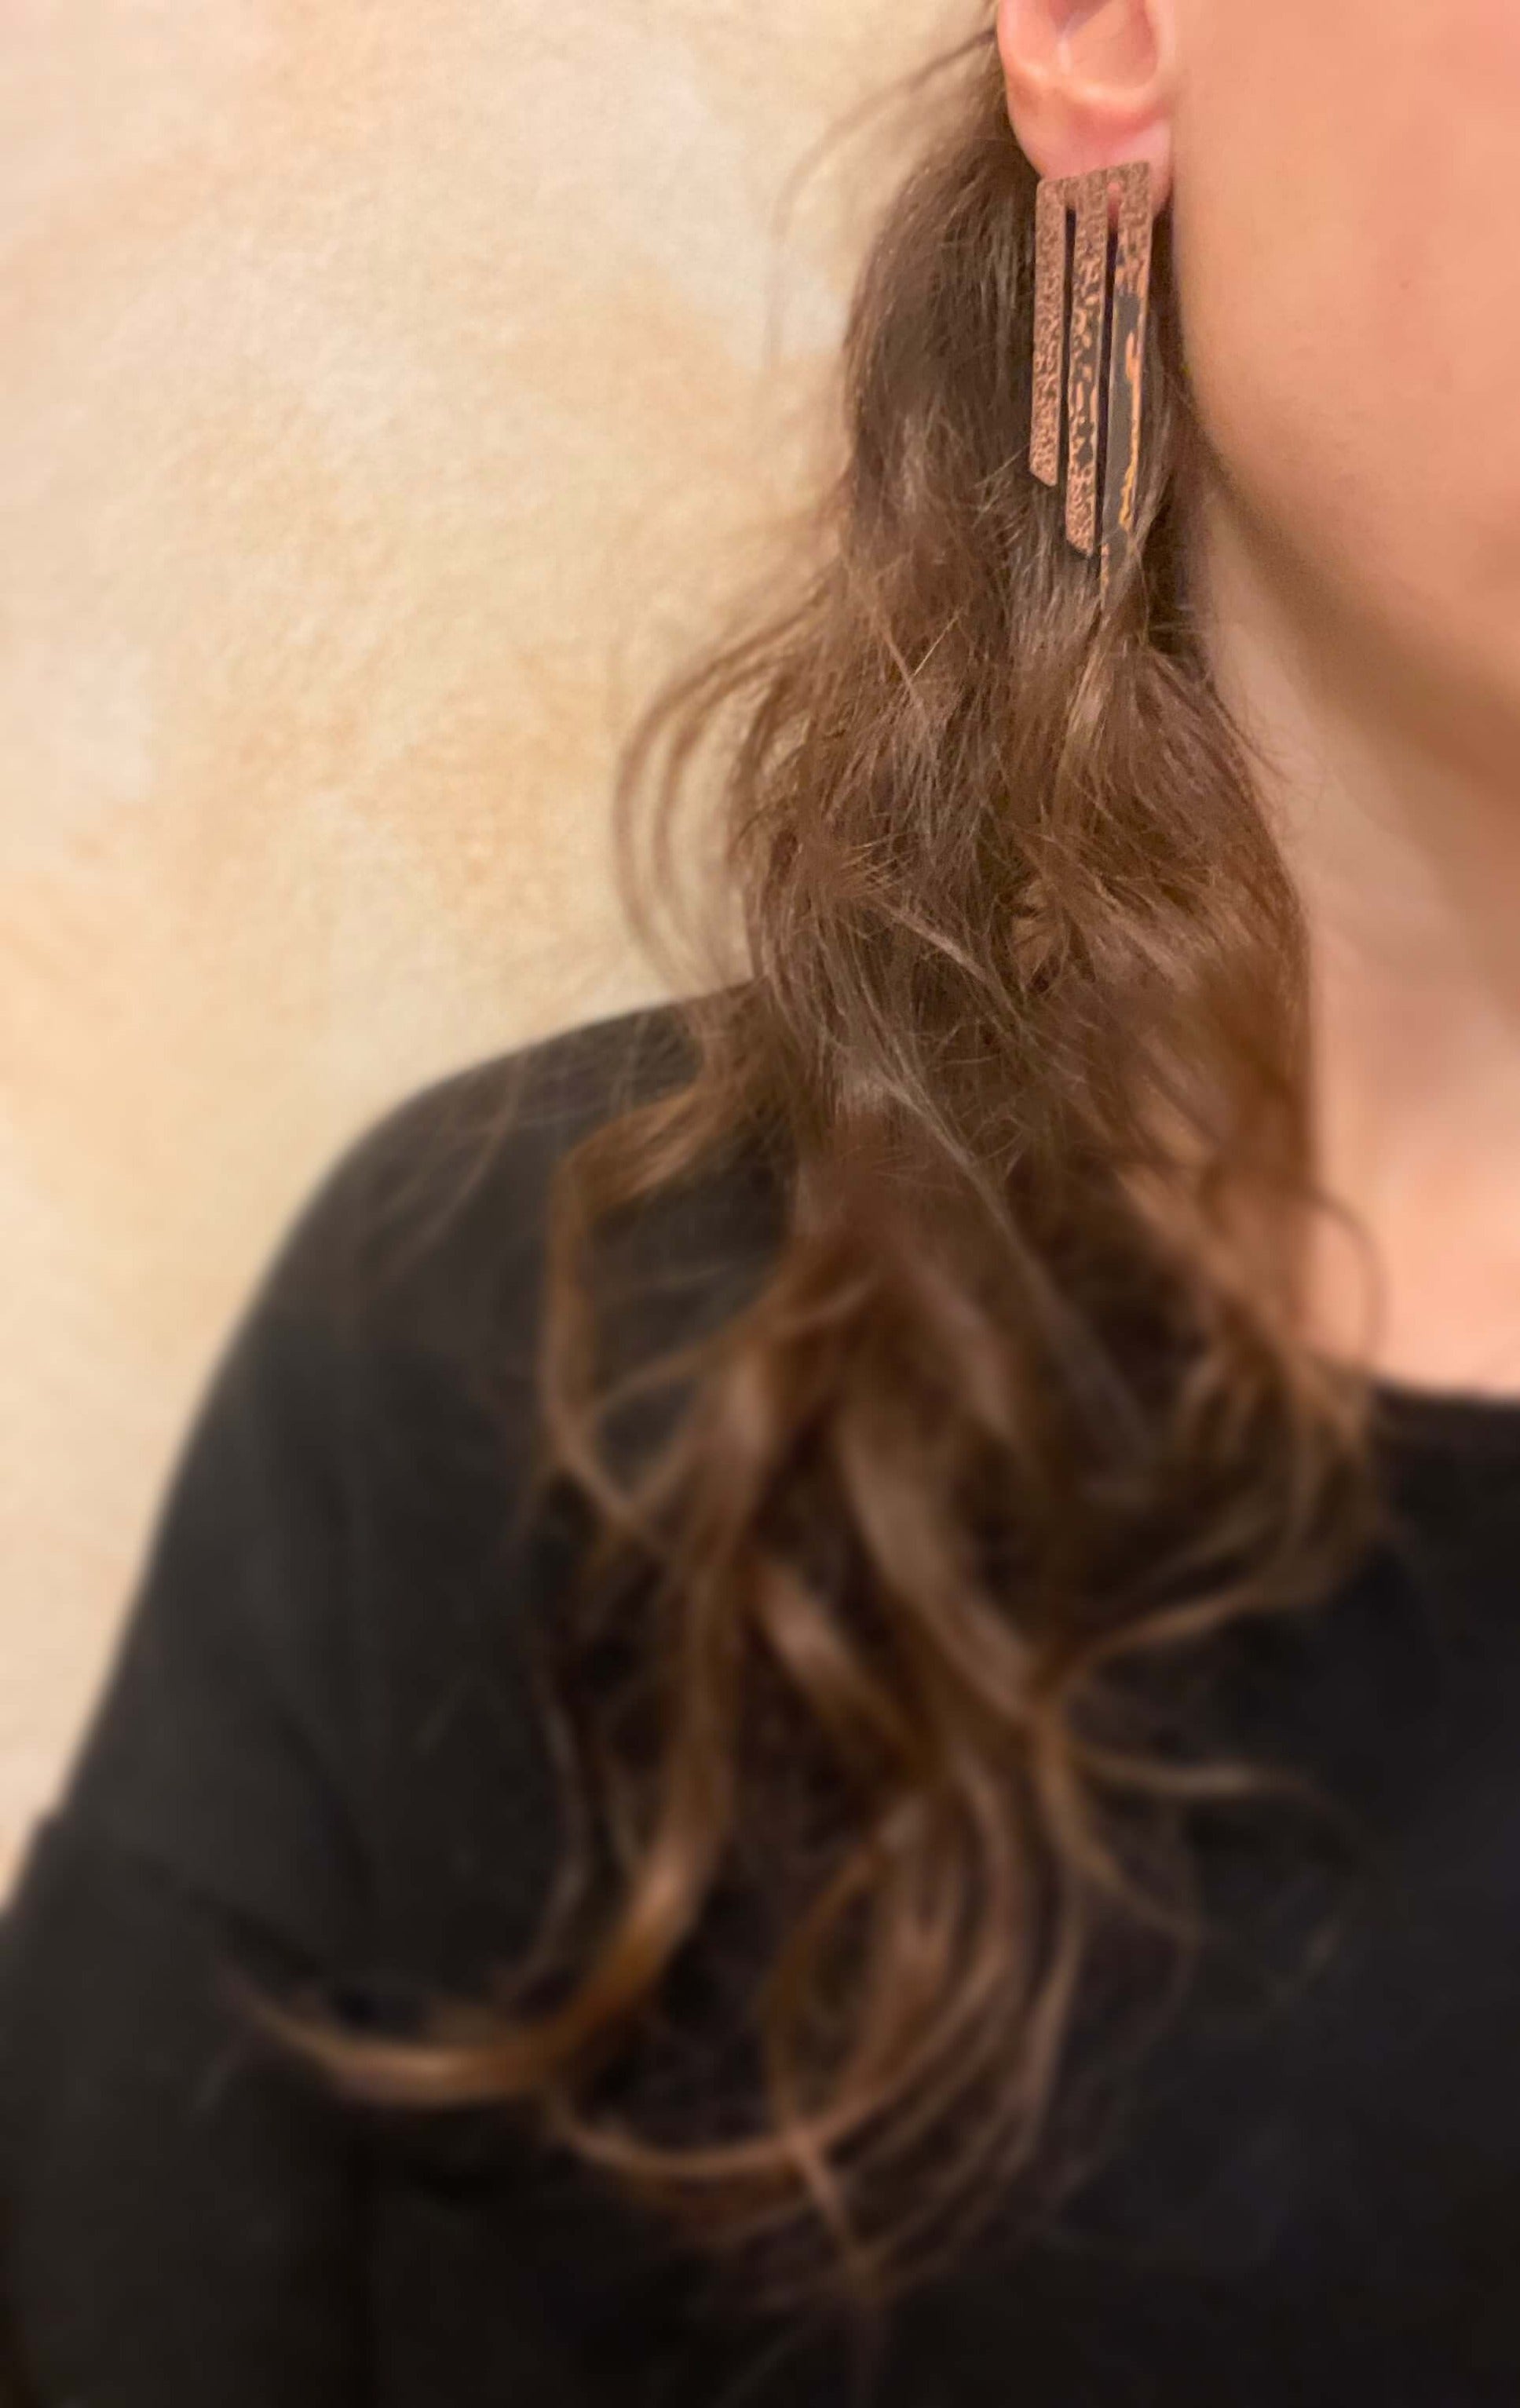 Oxidised copper Earrings | Rose - Black Feathers Earrings - CURIUDO